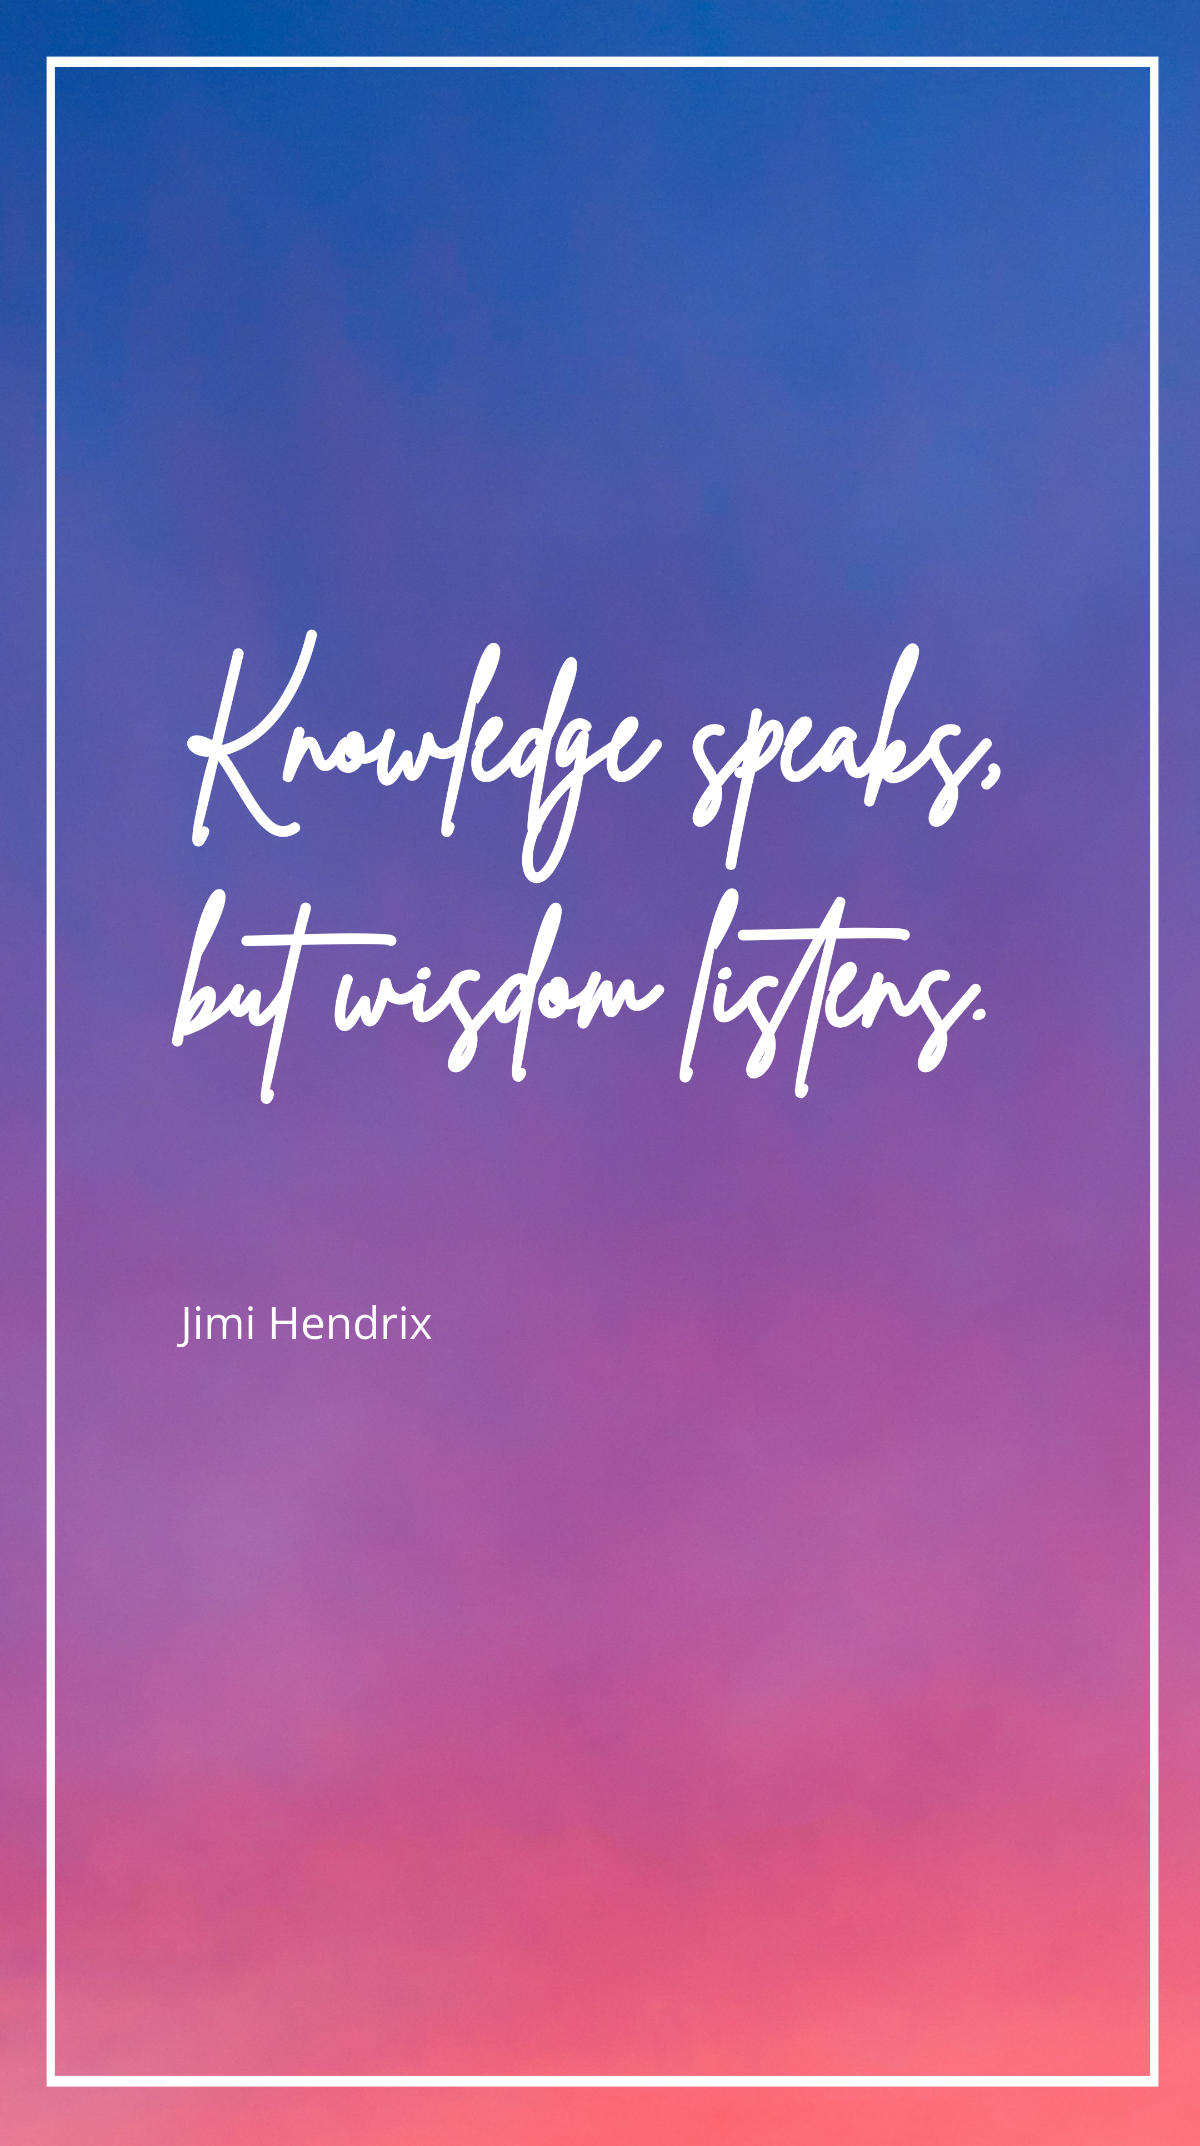 Jimi Hendrix - Knowledge speaks, but wisdom listens. Template